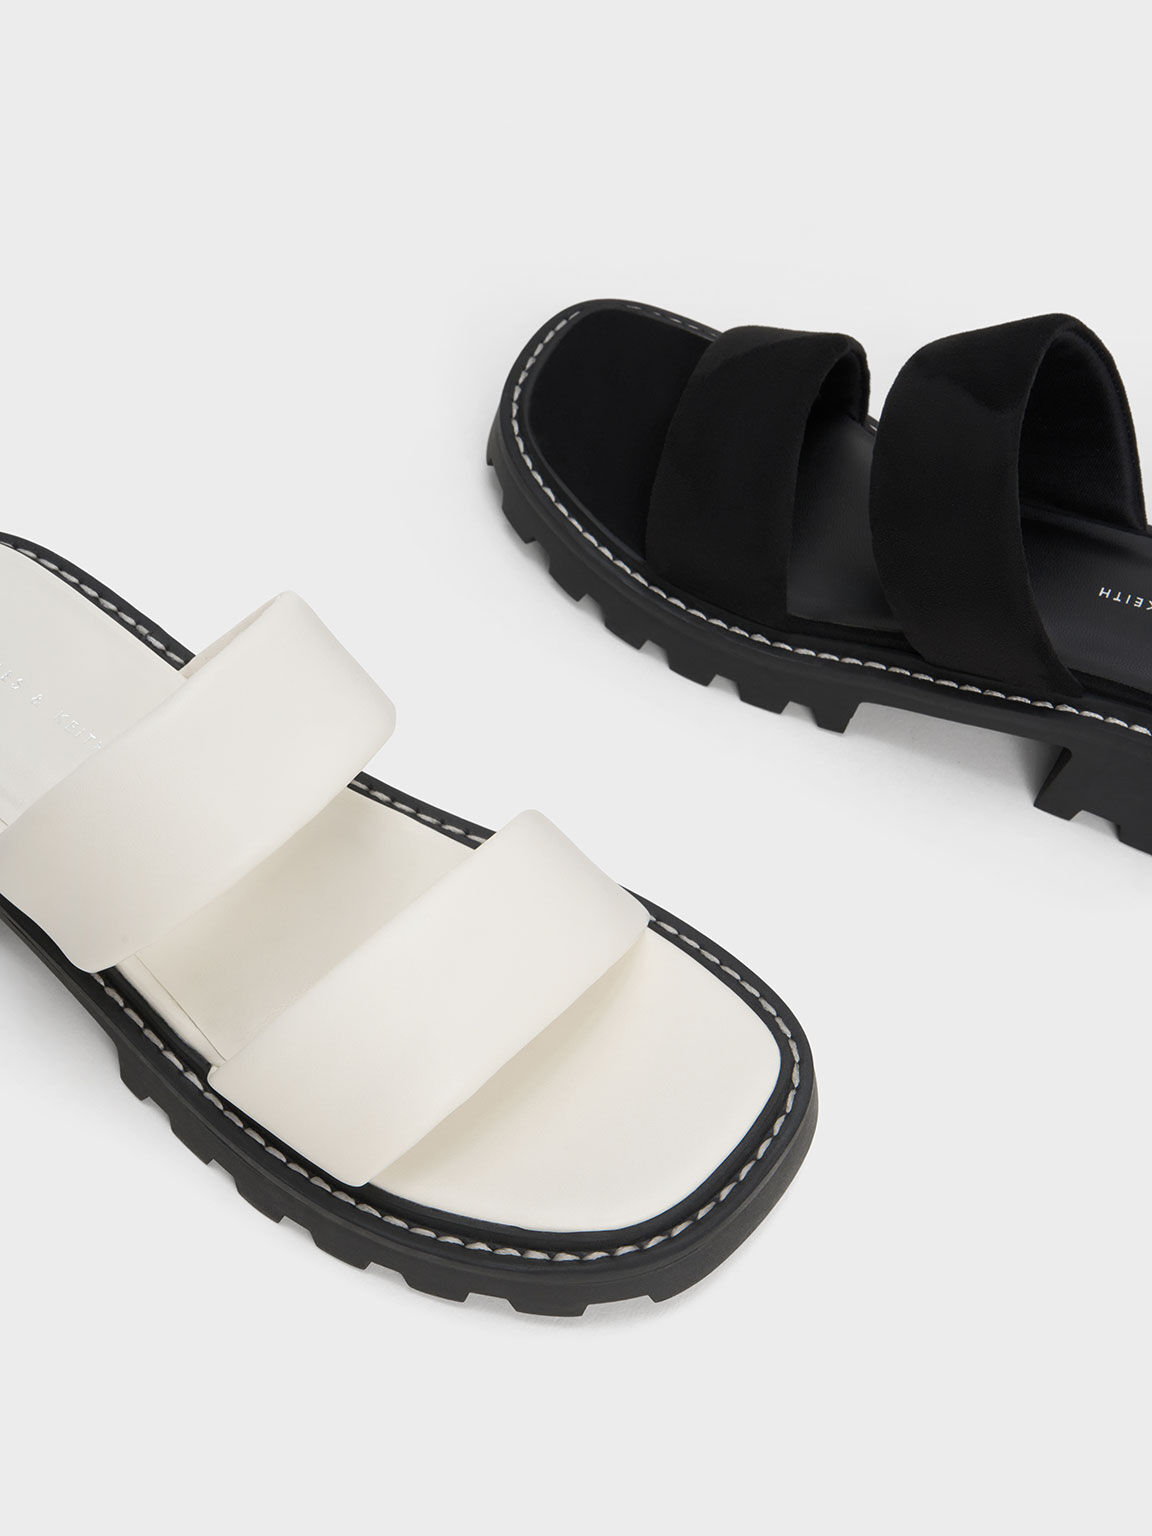 Sepatu Sliders Strap Double Padded, Black, hi-res